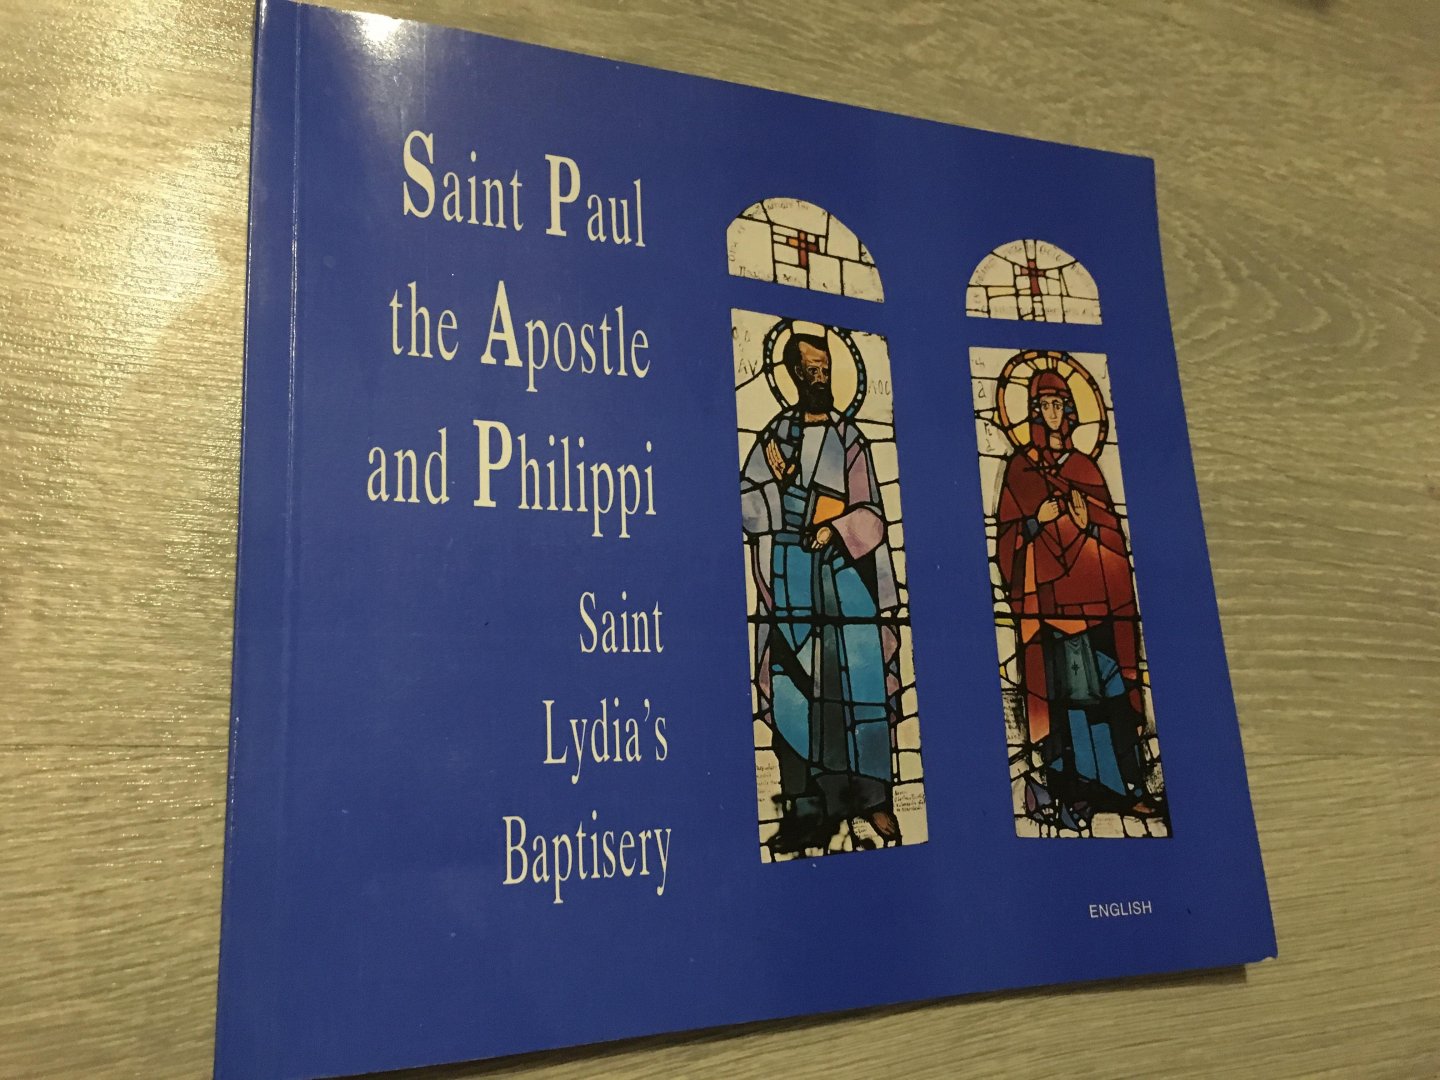  - Saint Paul the apostle And Philippi, Saint lydia’s Baptisery